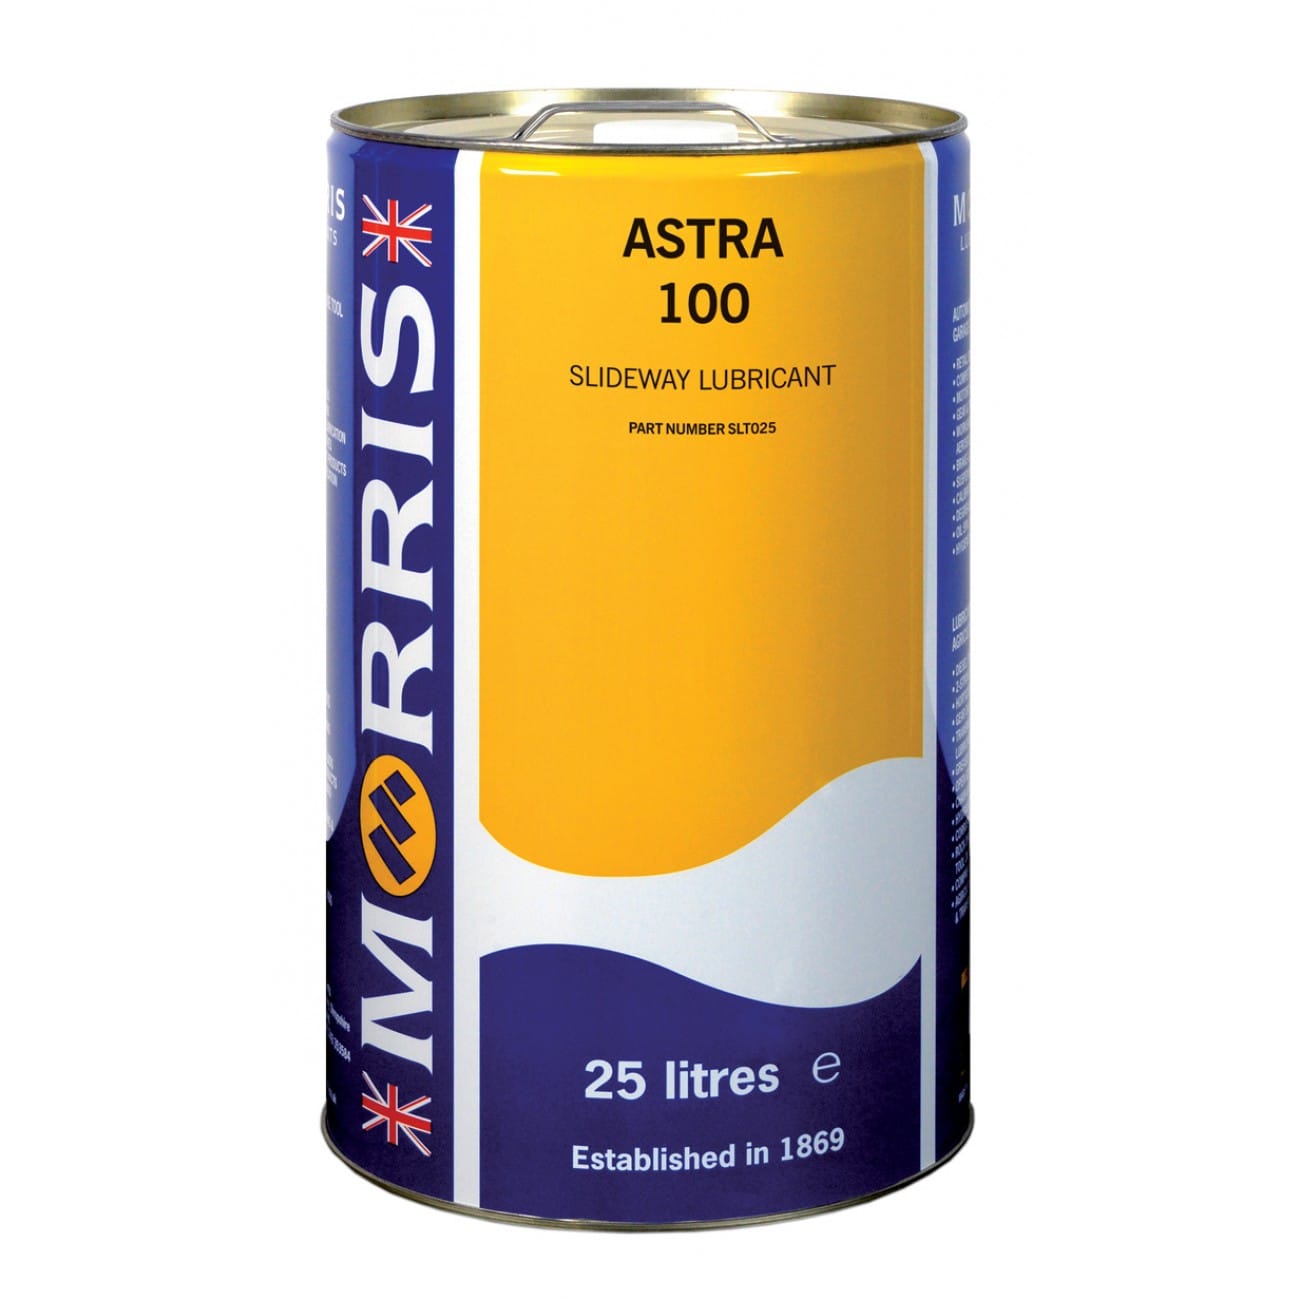 Astra 100 Slideway Oil